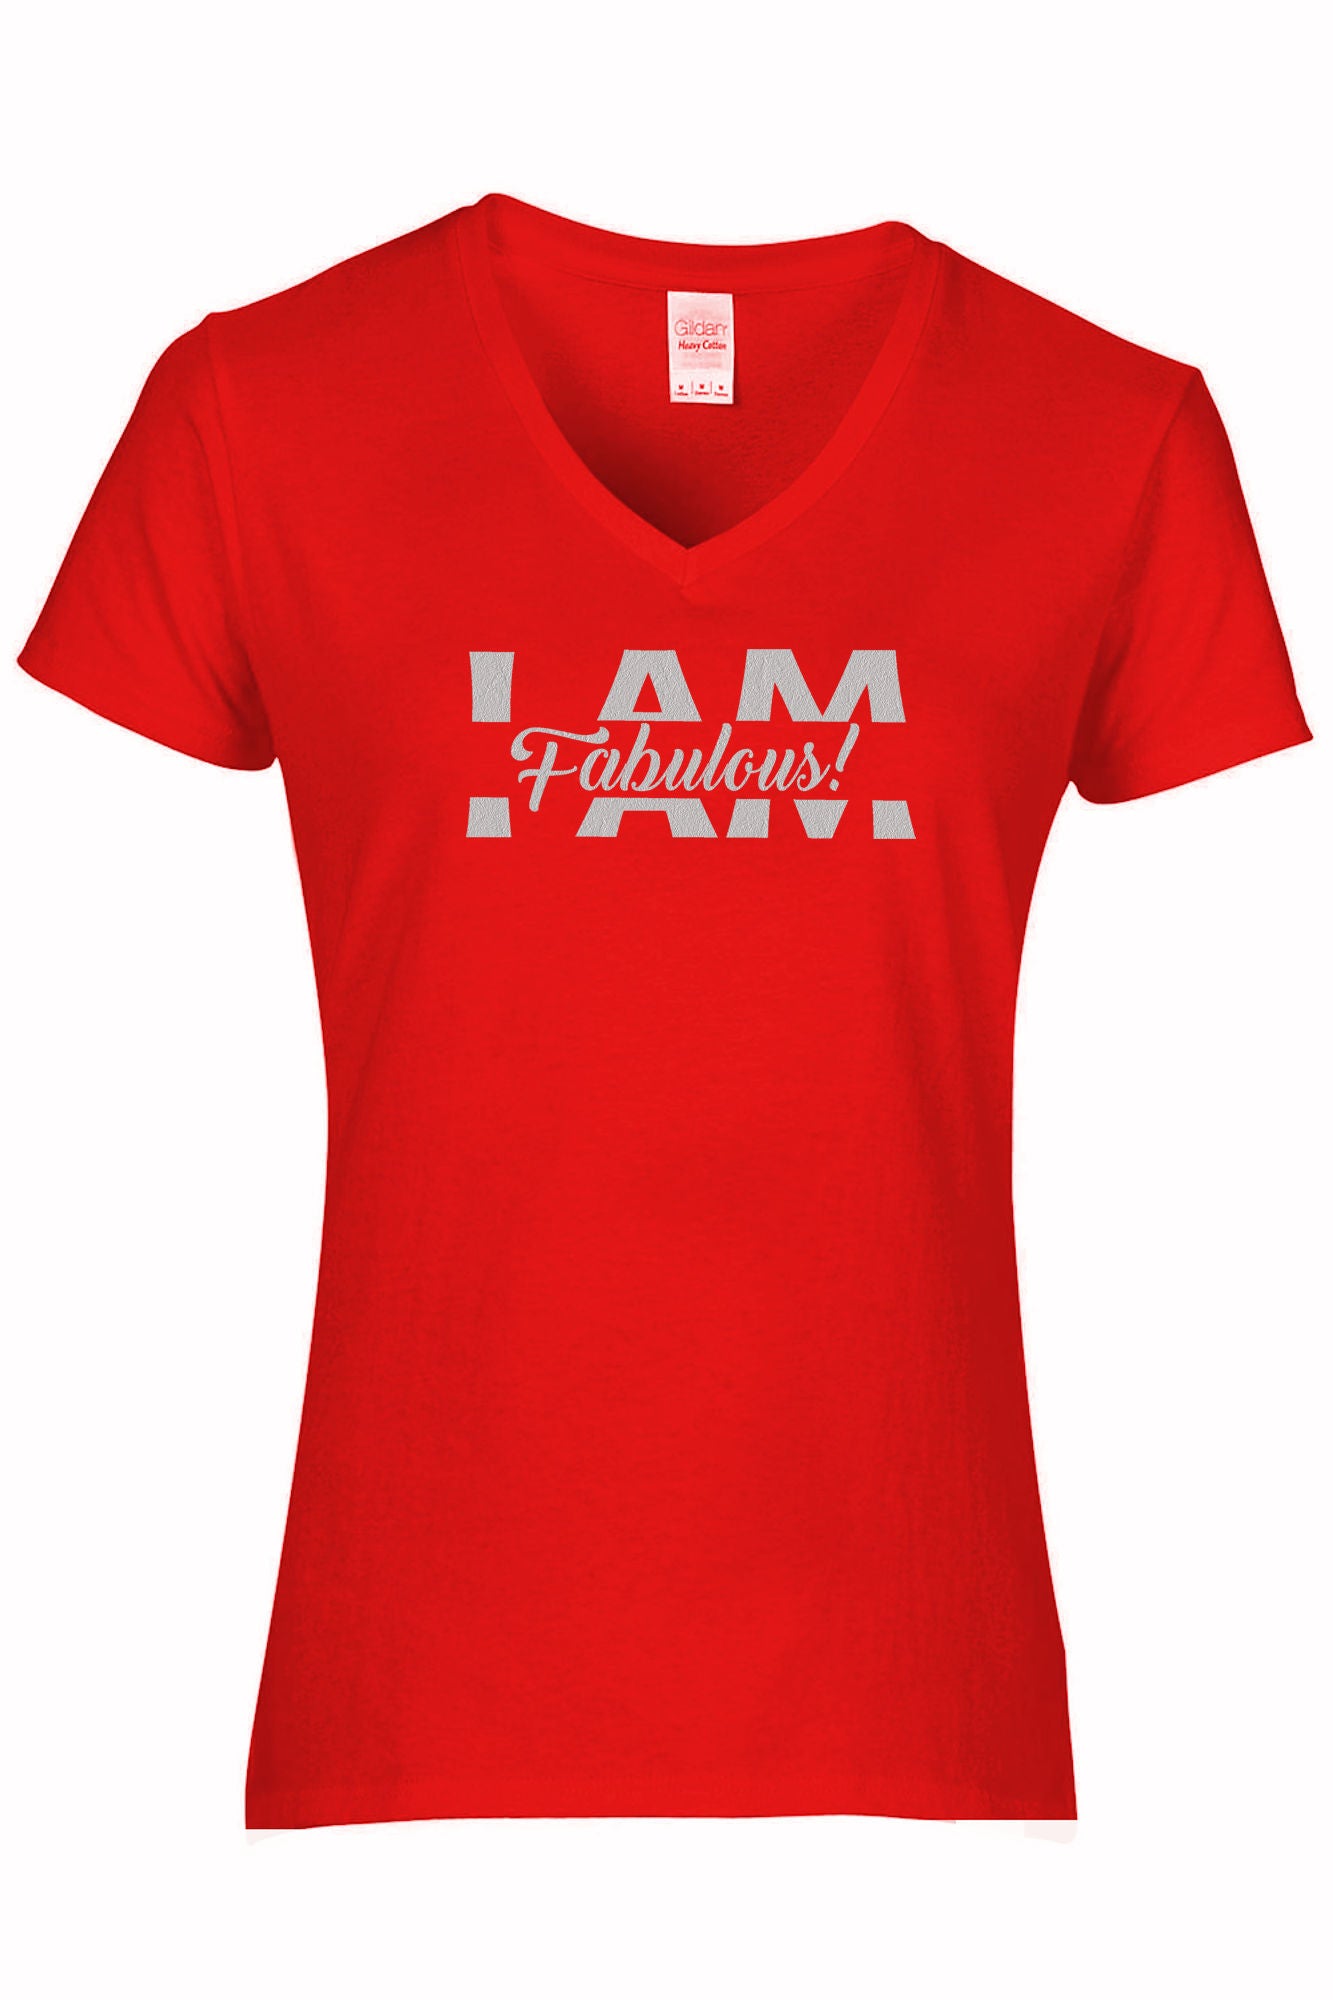 I AM Self Expression T-Shirt